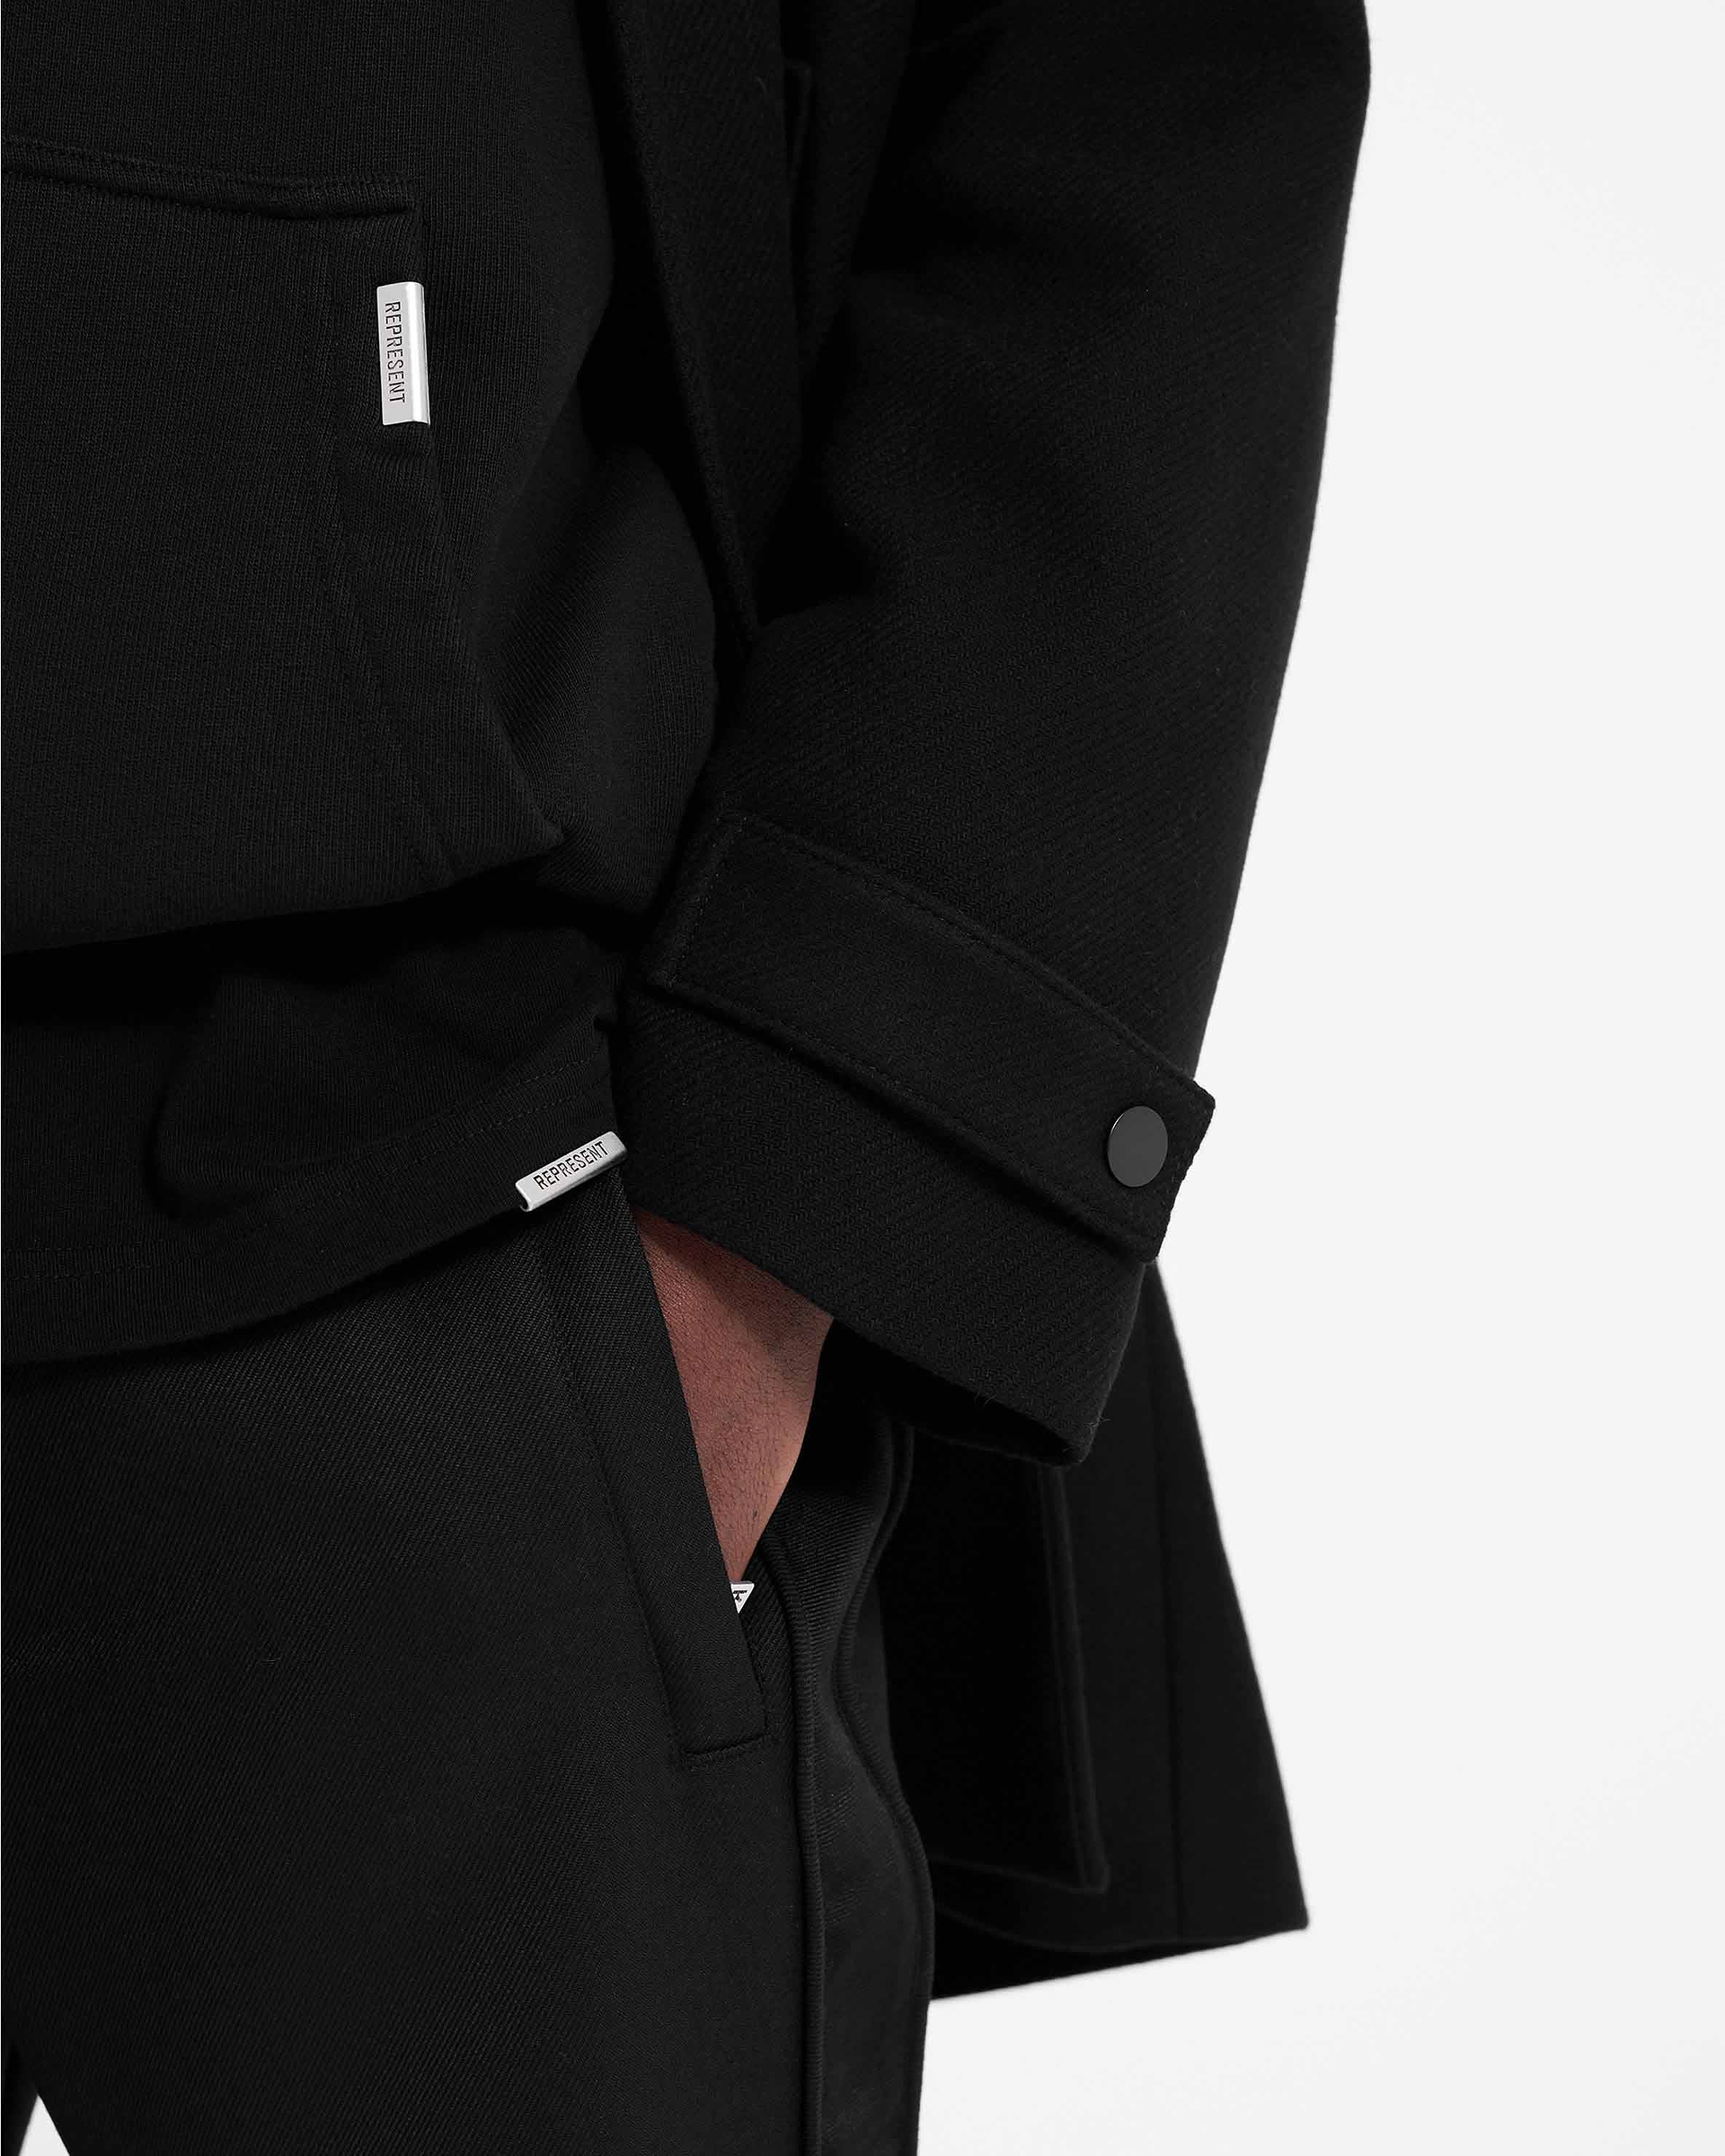 Joseph Reversible Double Face Colour Block Merton Coat - Size 32 - Black/Grey - 100% Wool